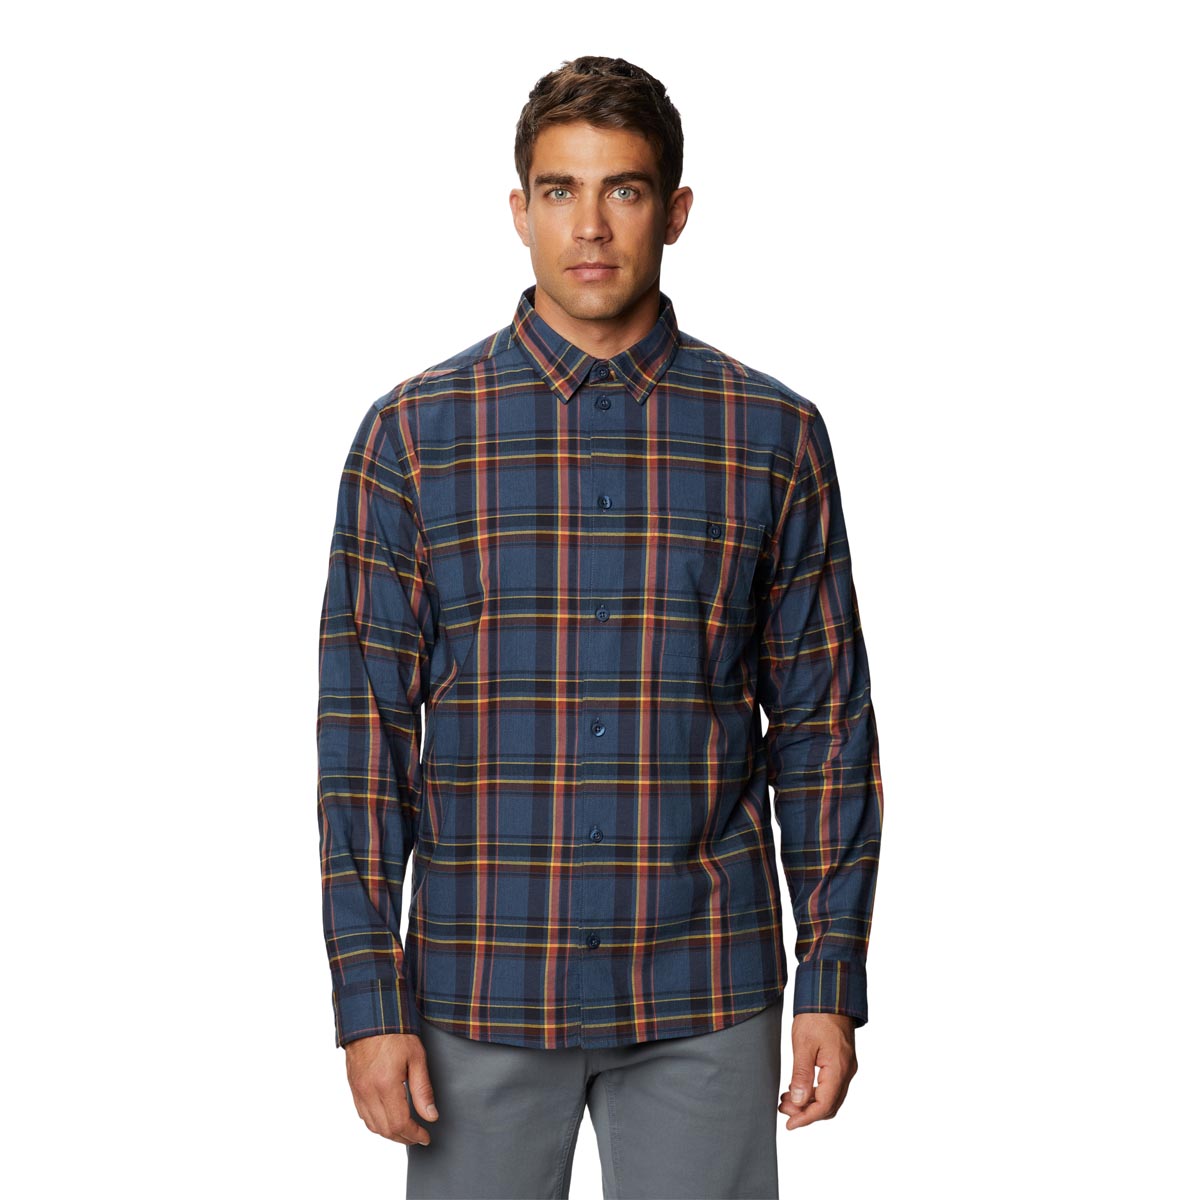 Mountain Hardwear Men's Big Cottonwood Long Sleeve Shirt